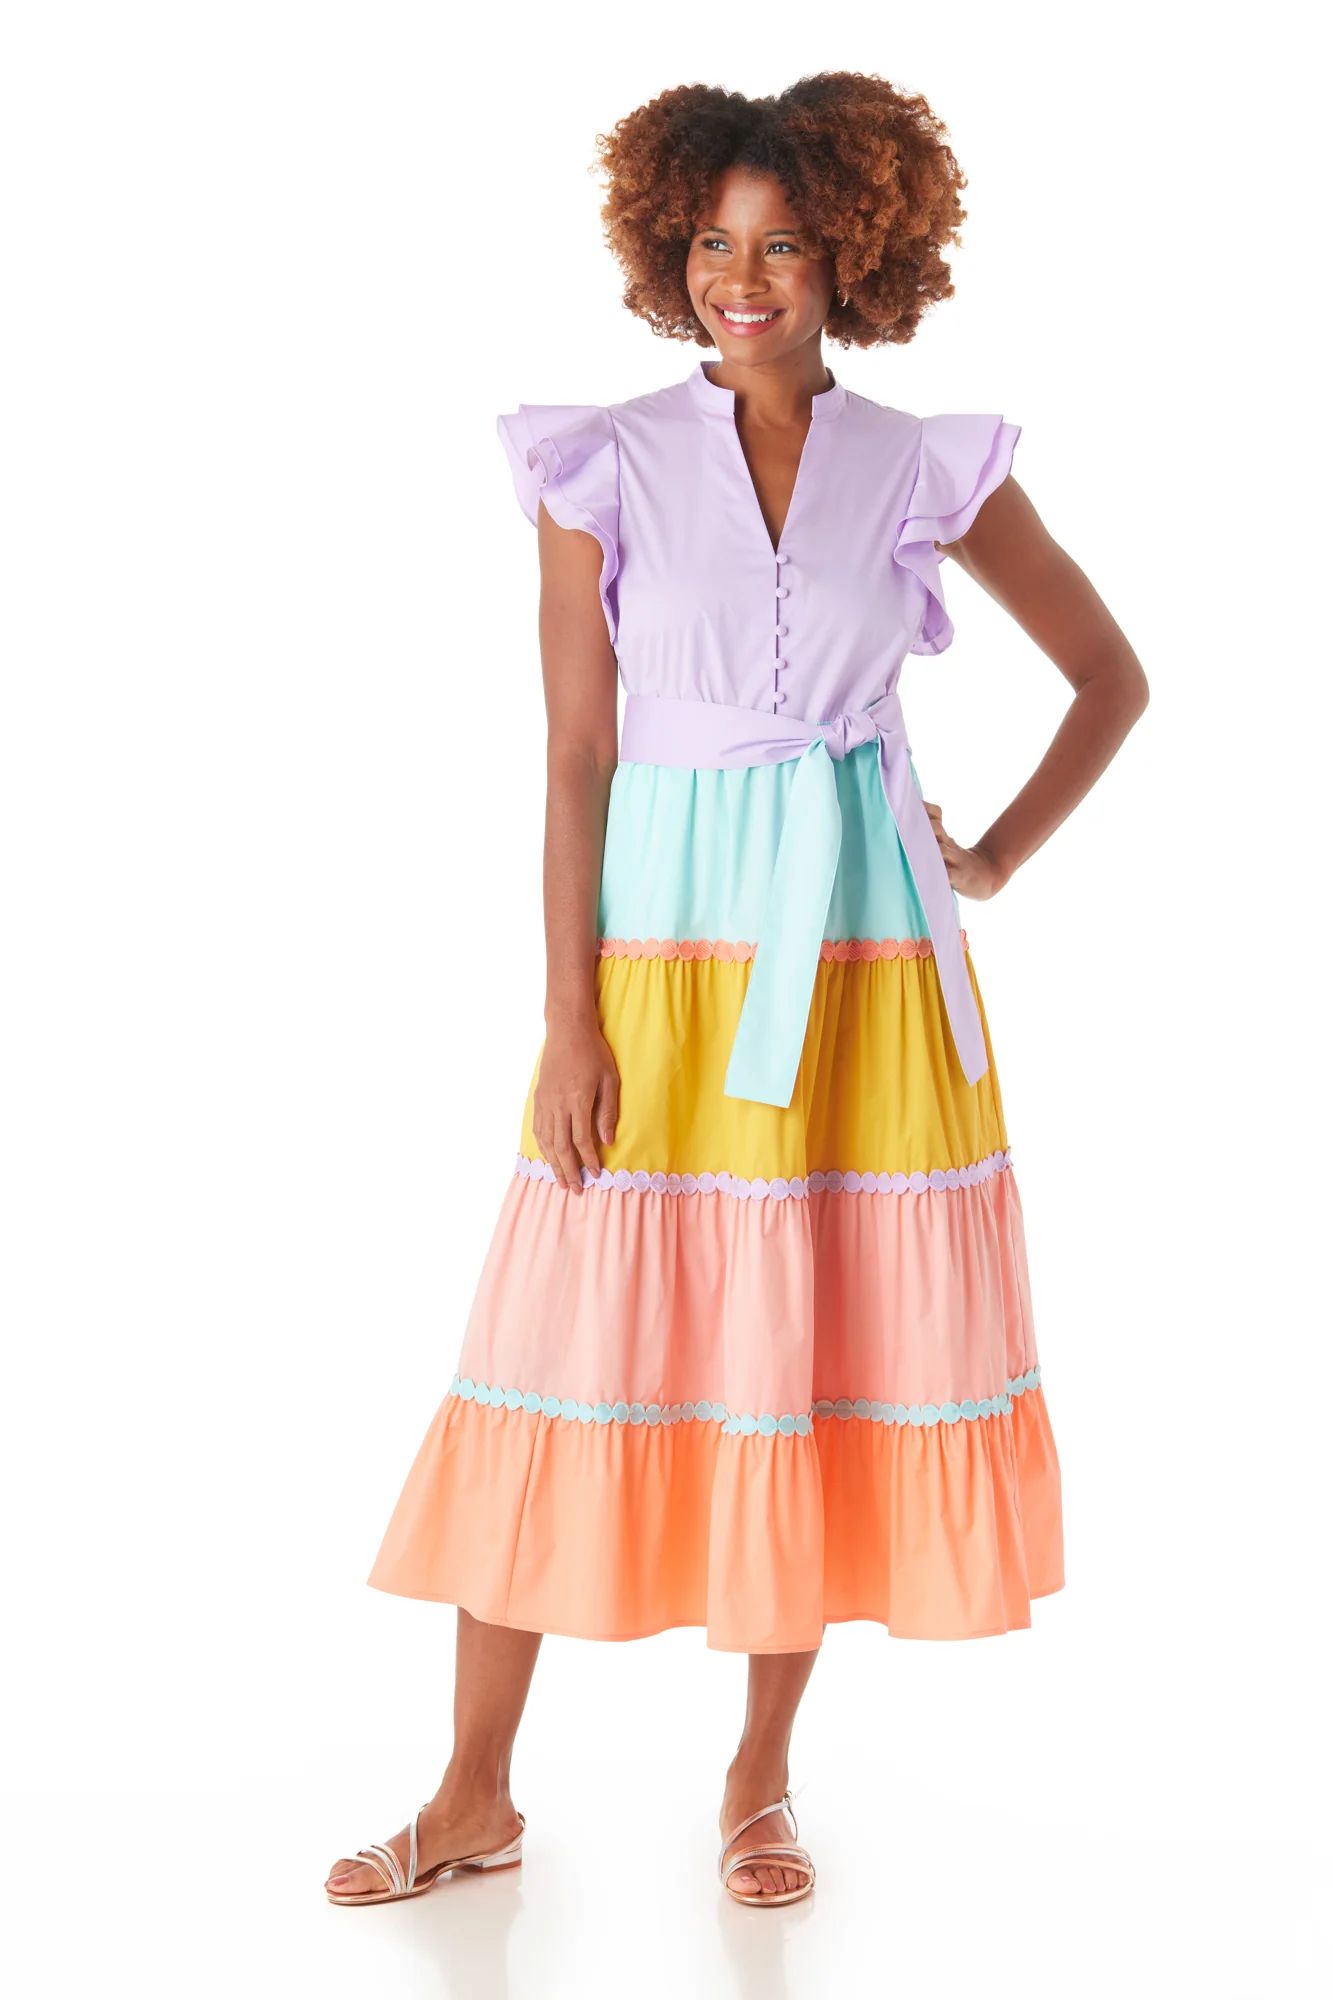 Kemble Dress in Sherbet Colorblock | CROSBY by Mollie Burch | CROSBY by Mollie Burch